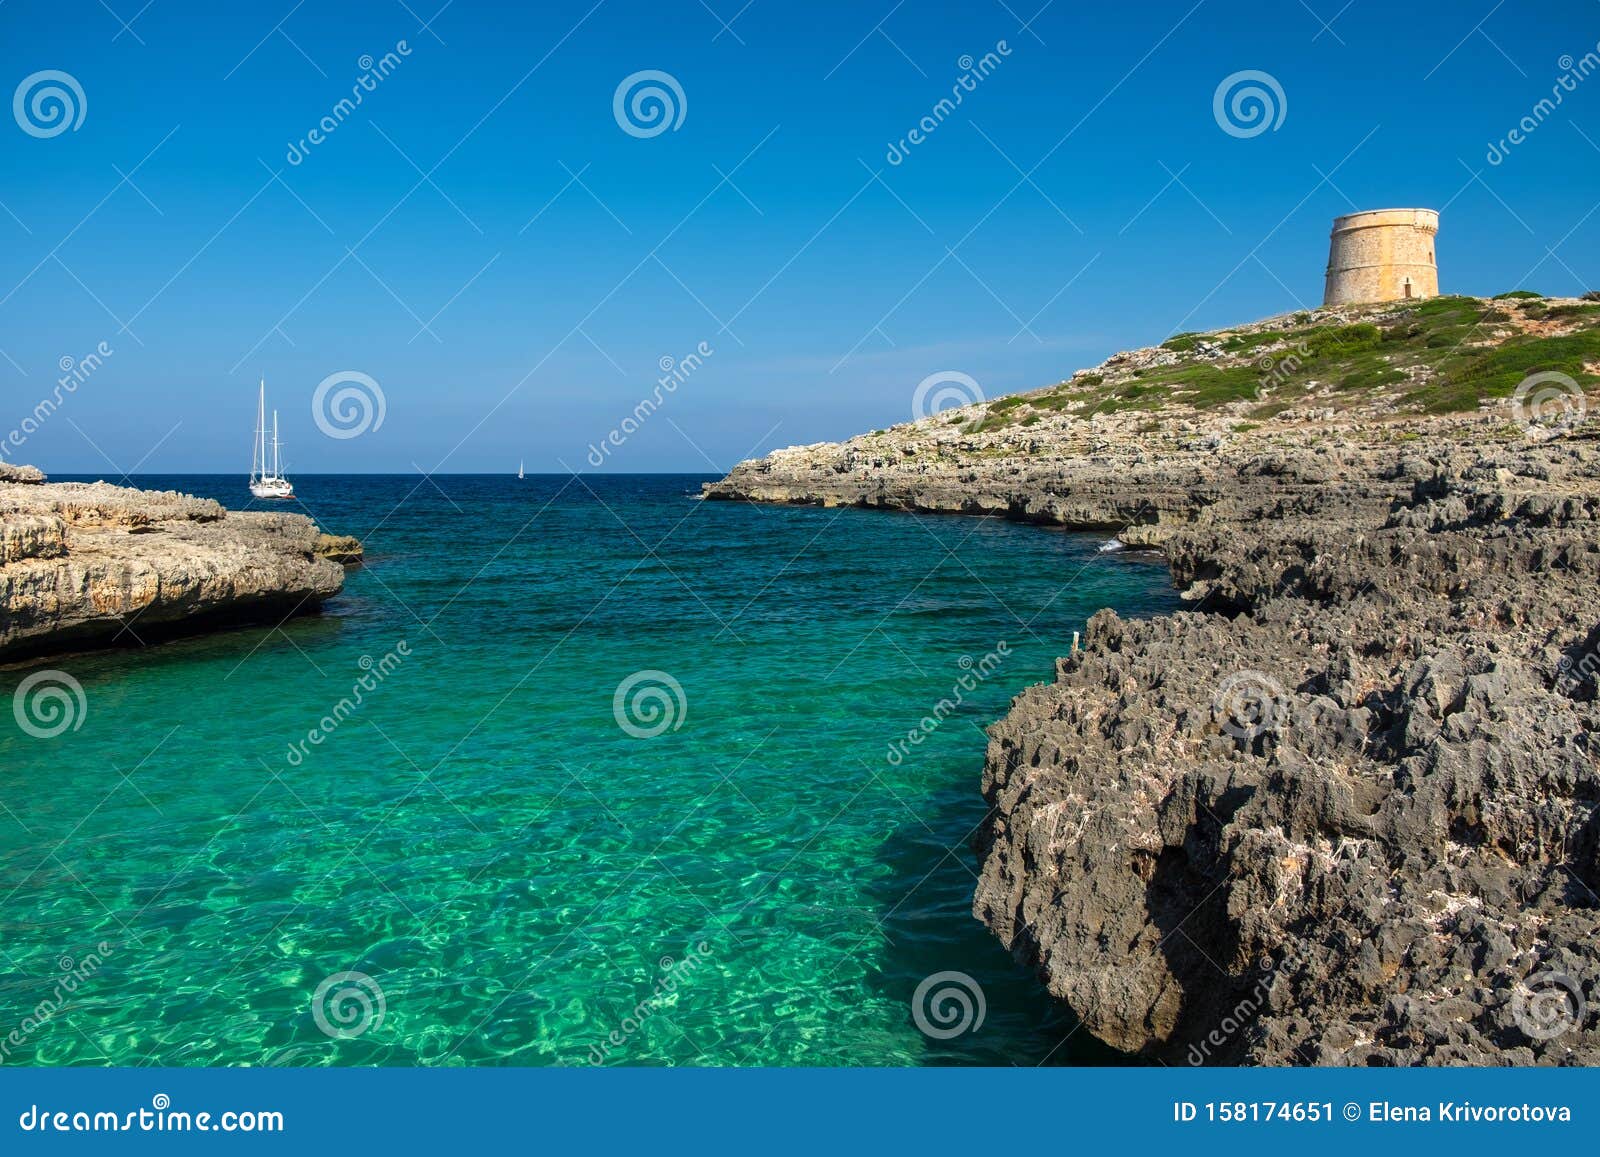 view on the beach calo roig and the defense tower alcaufar on menorca